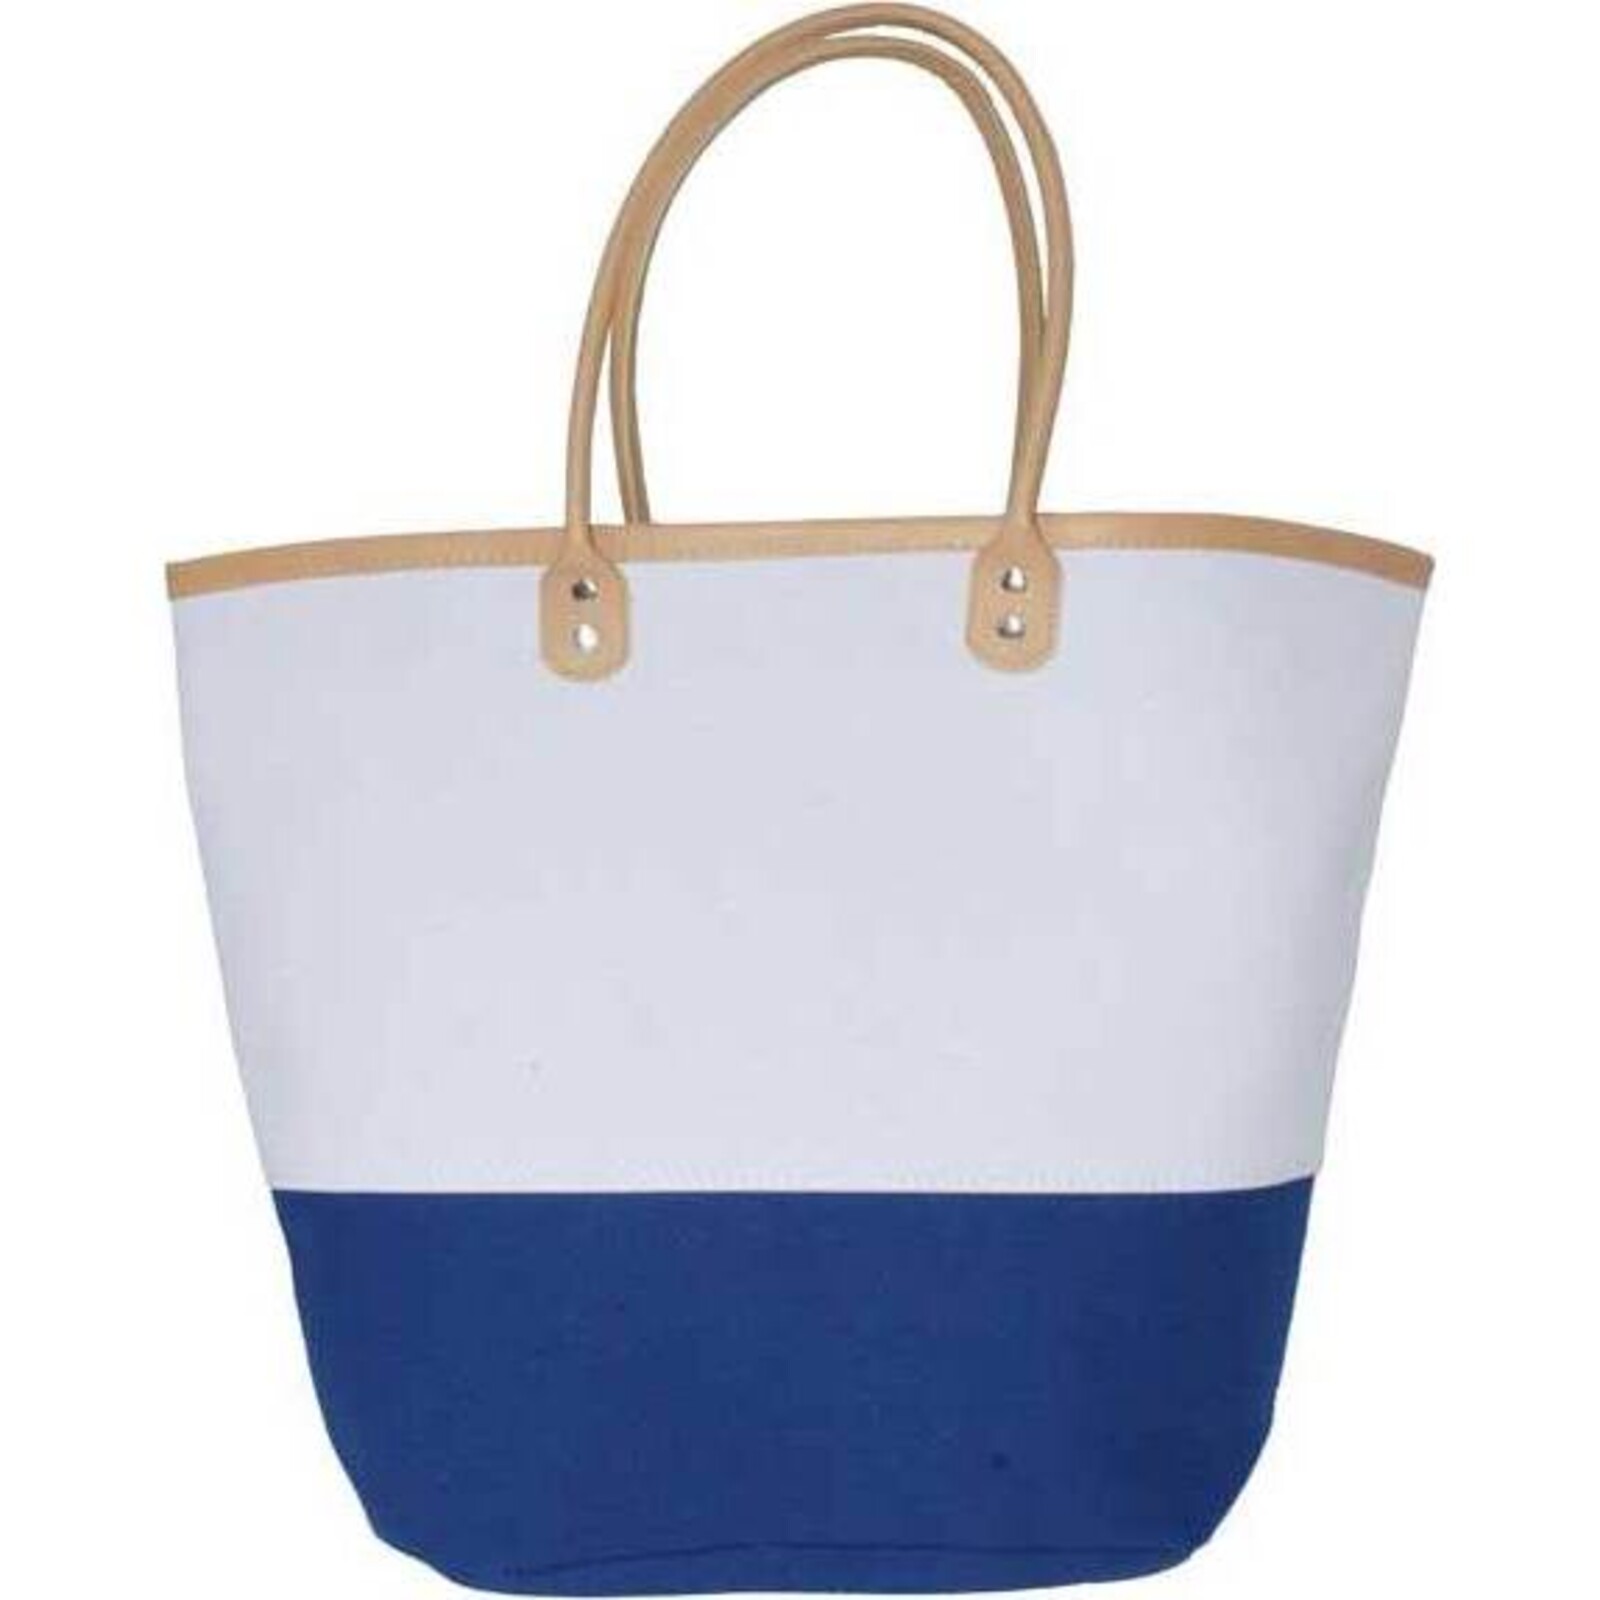 Two-Tone Hamptons Style Bag - Blue